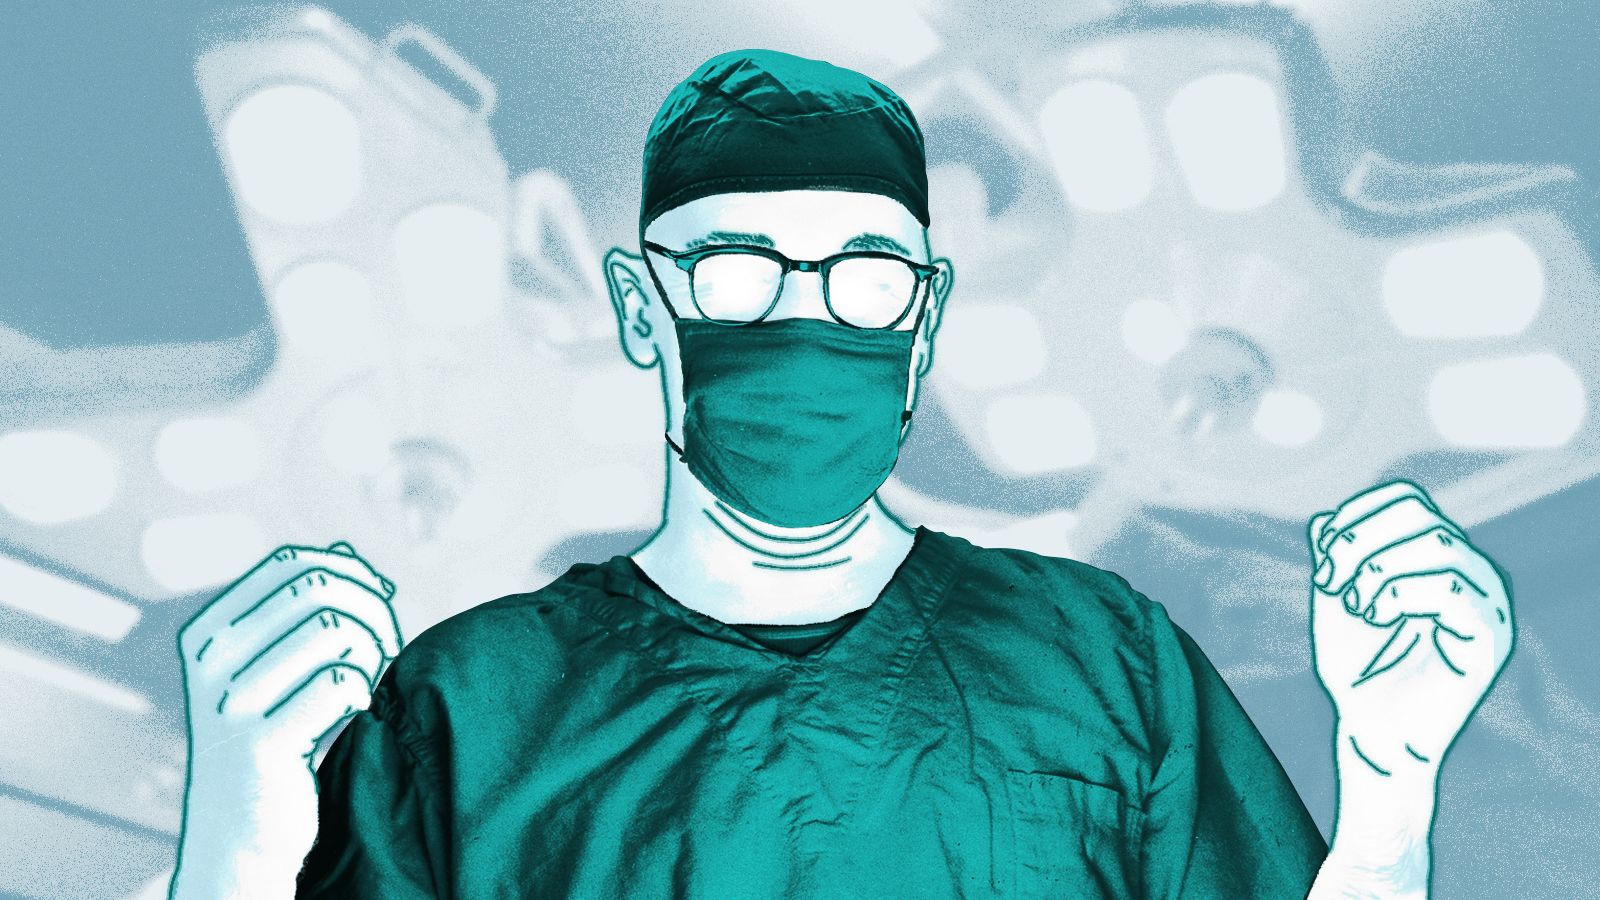 Sex Doctors Forced Videos - South Korea's dangerous ghost doctors are putting plastic surgery patients'  lives at risk | CNN